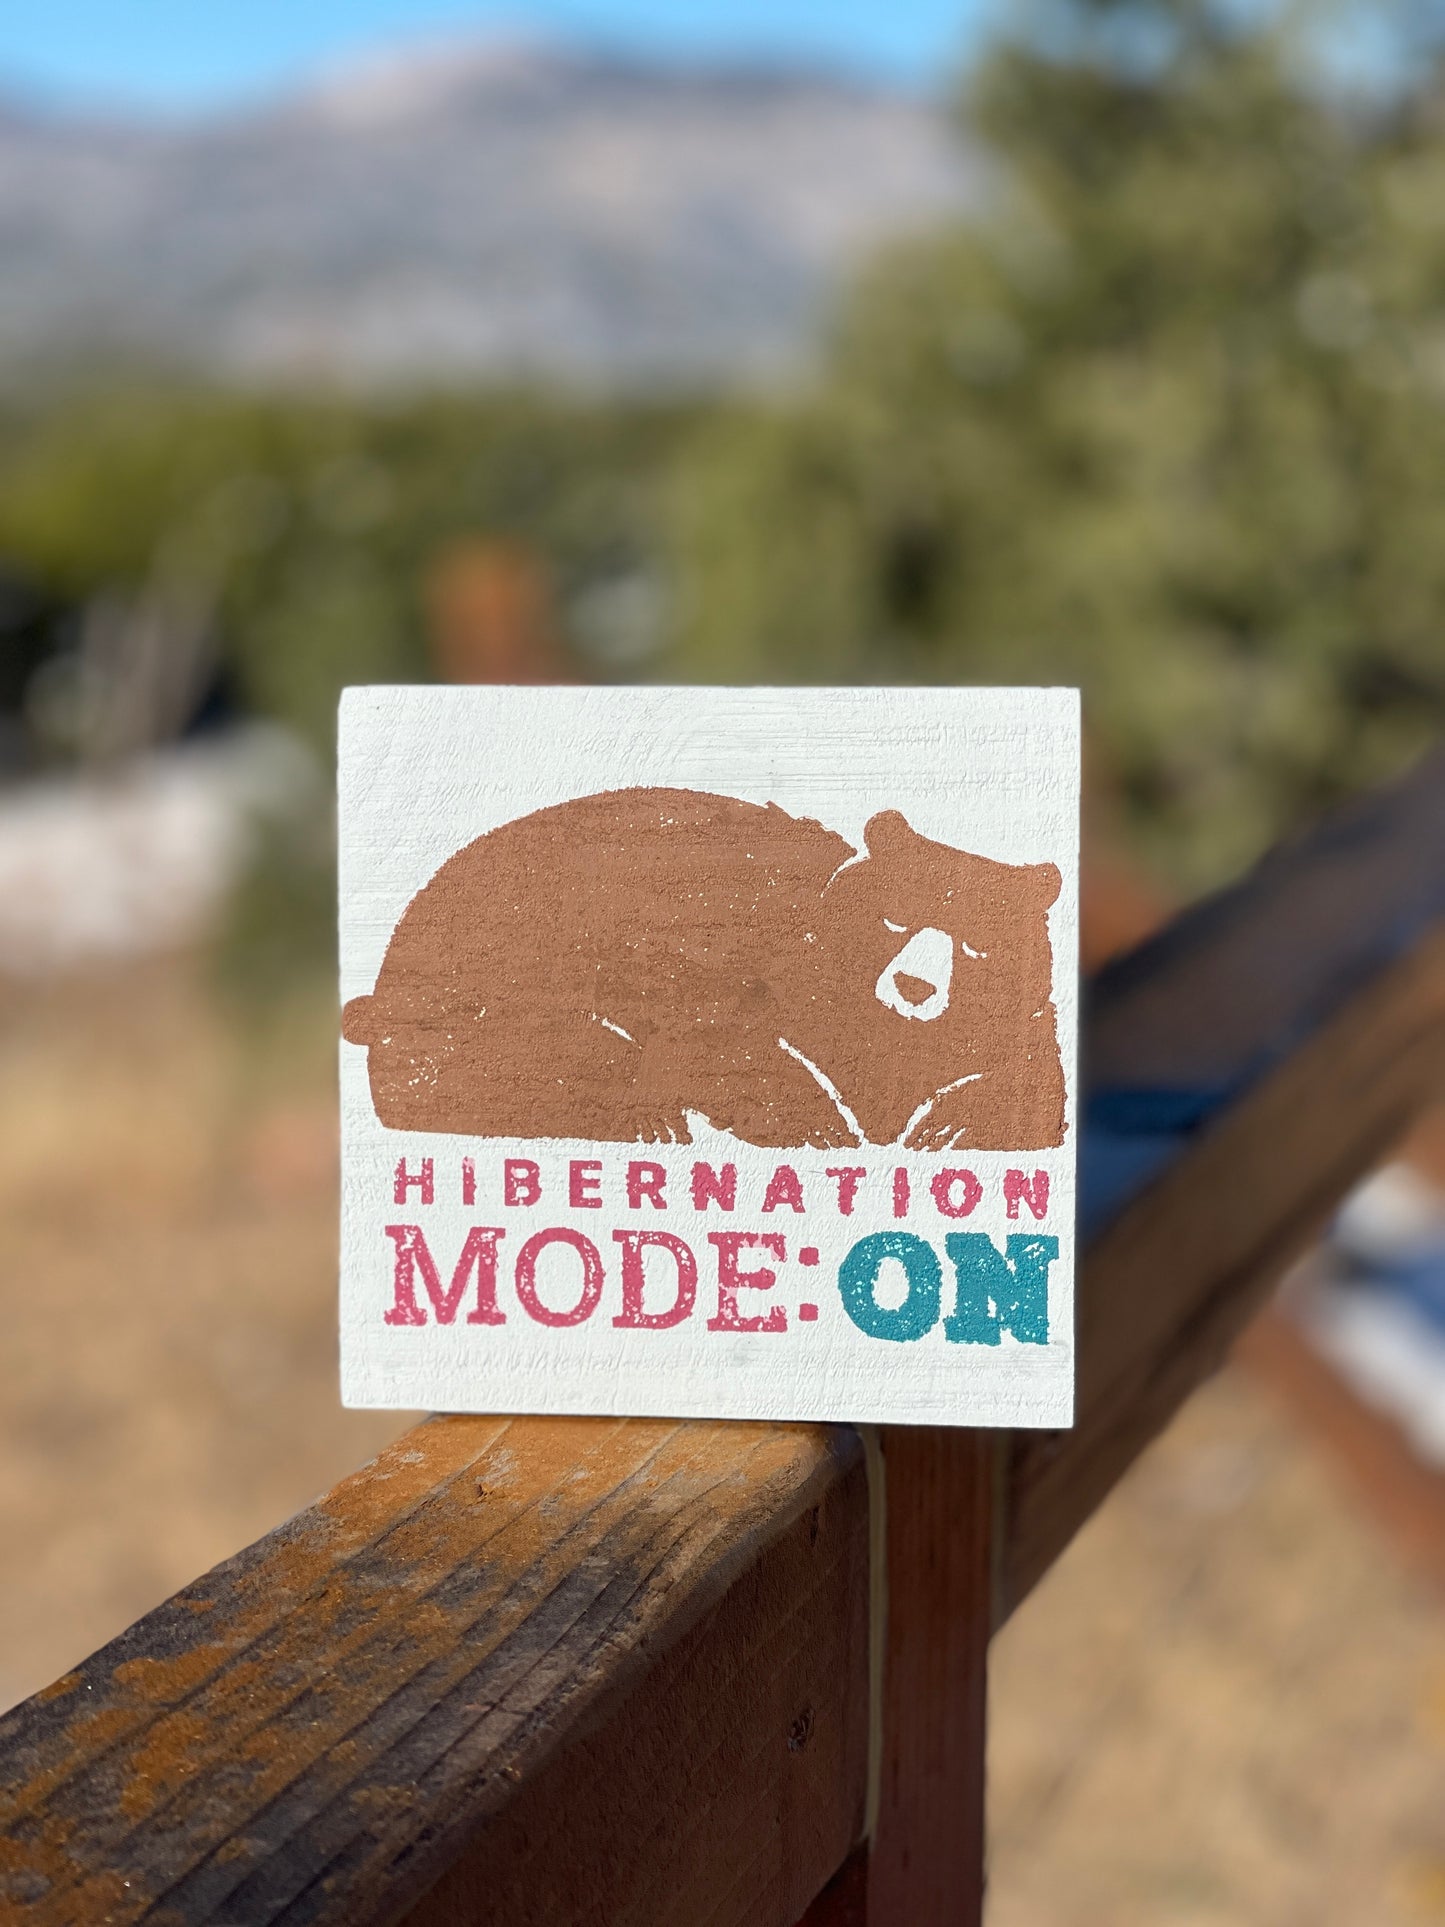 Hibernation Mode